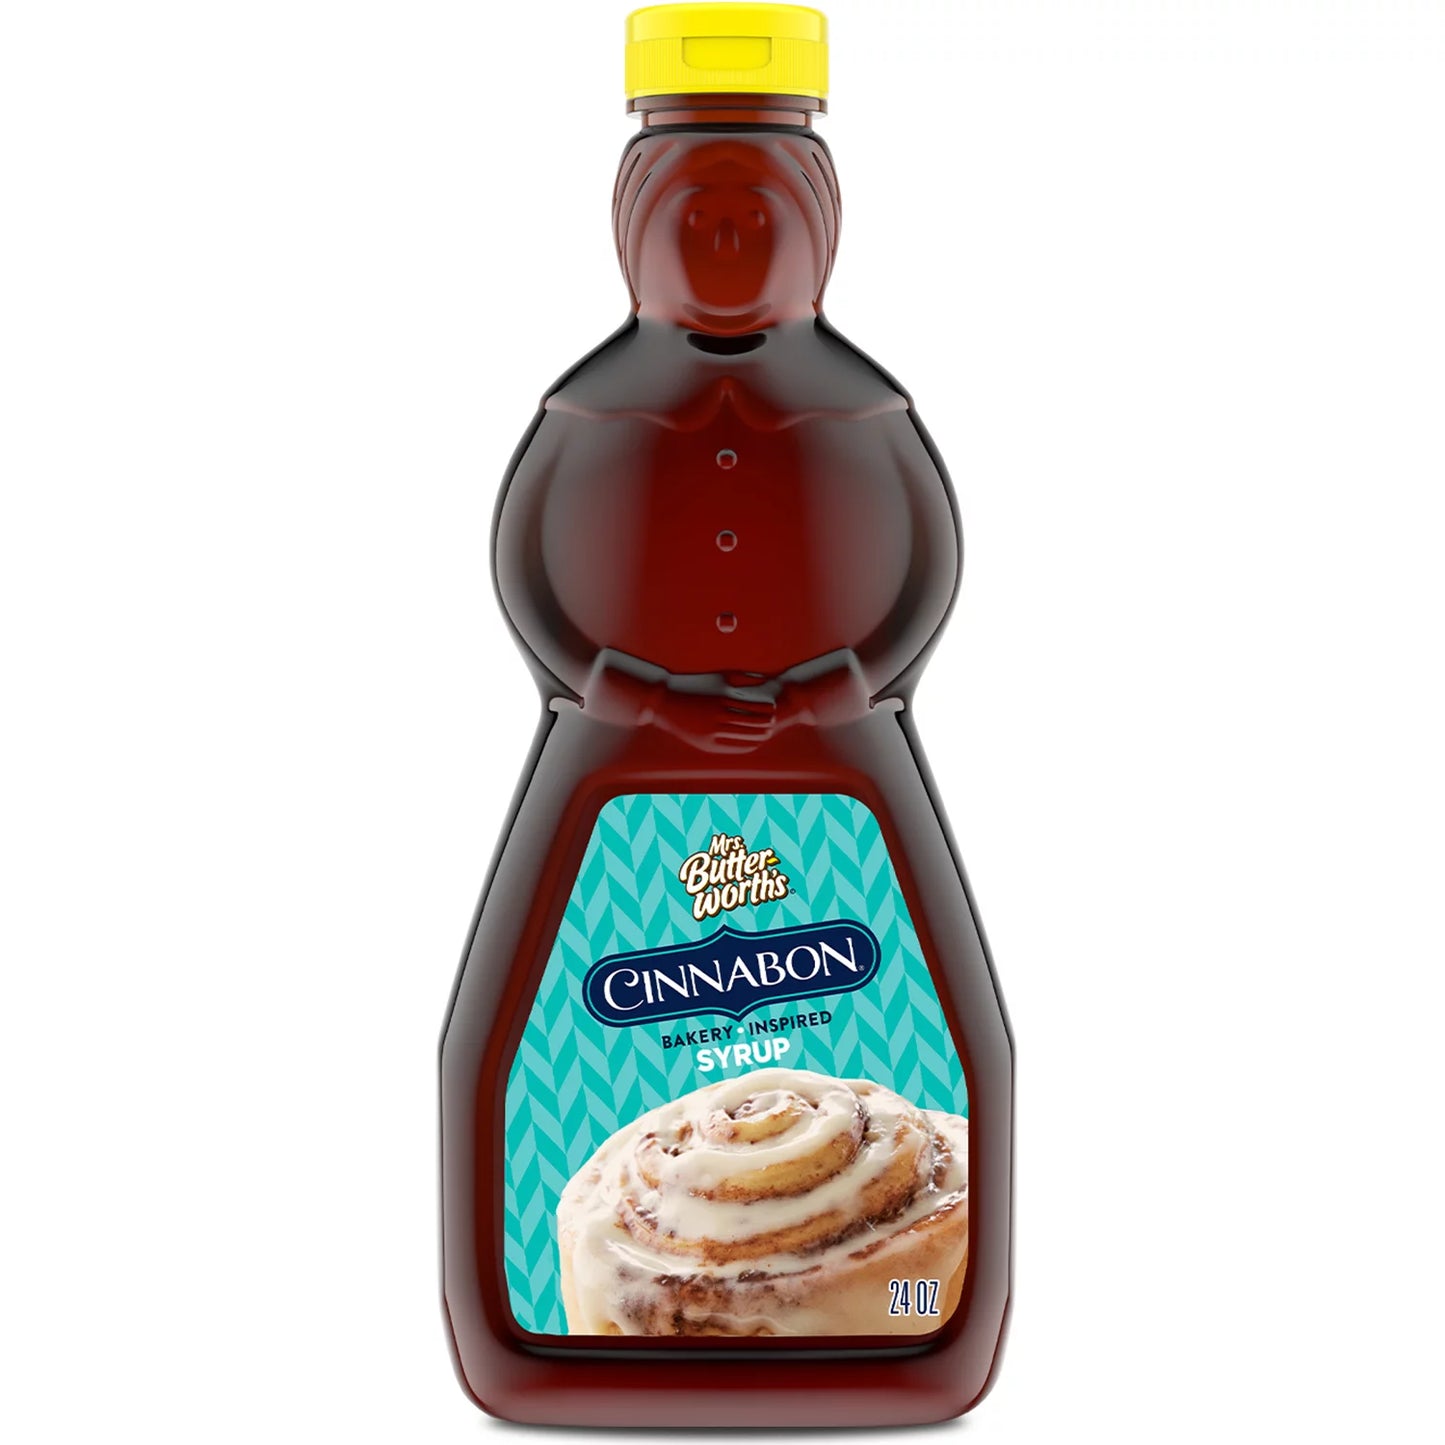 Mrs. Butterworth's Cinnabon Bakery Flavored Syrup 24 oz.